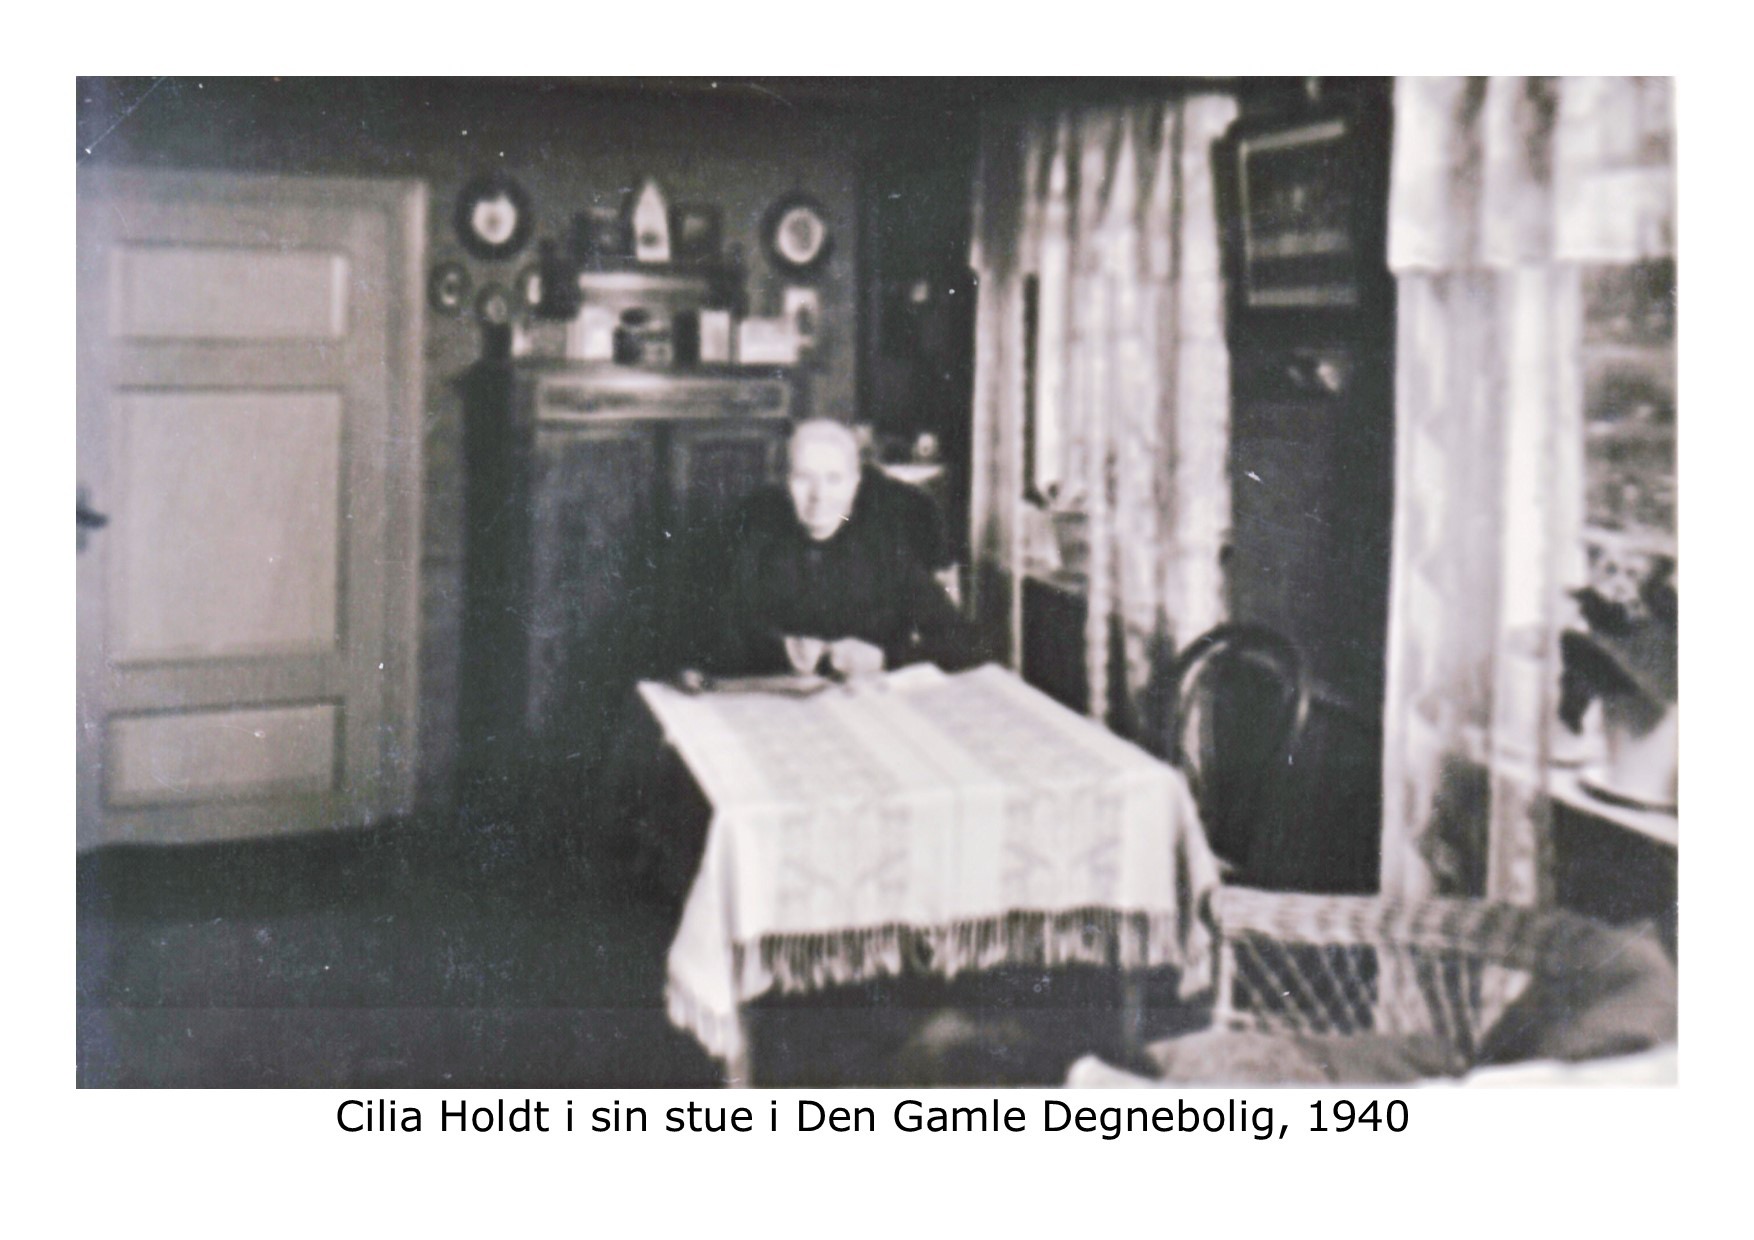 Cilia Holdt Degnebolig - 1940 